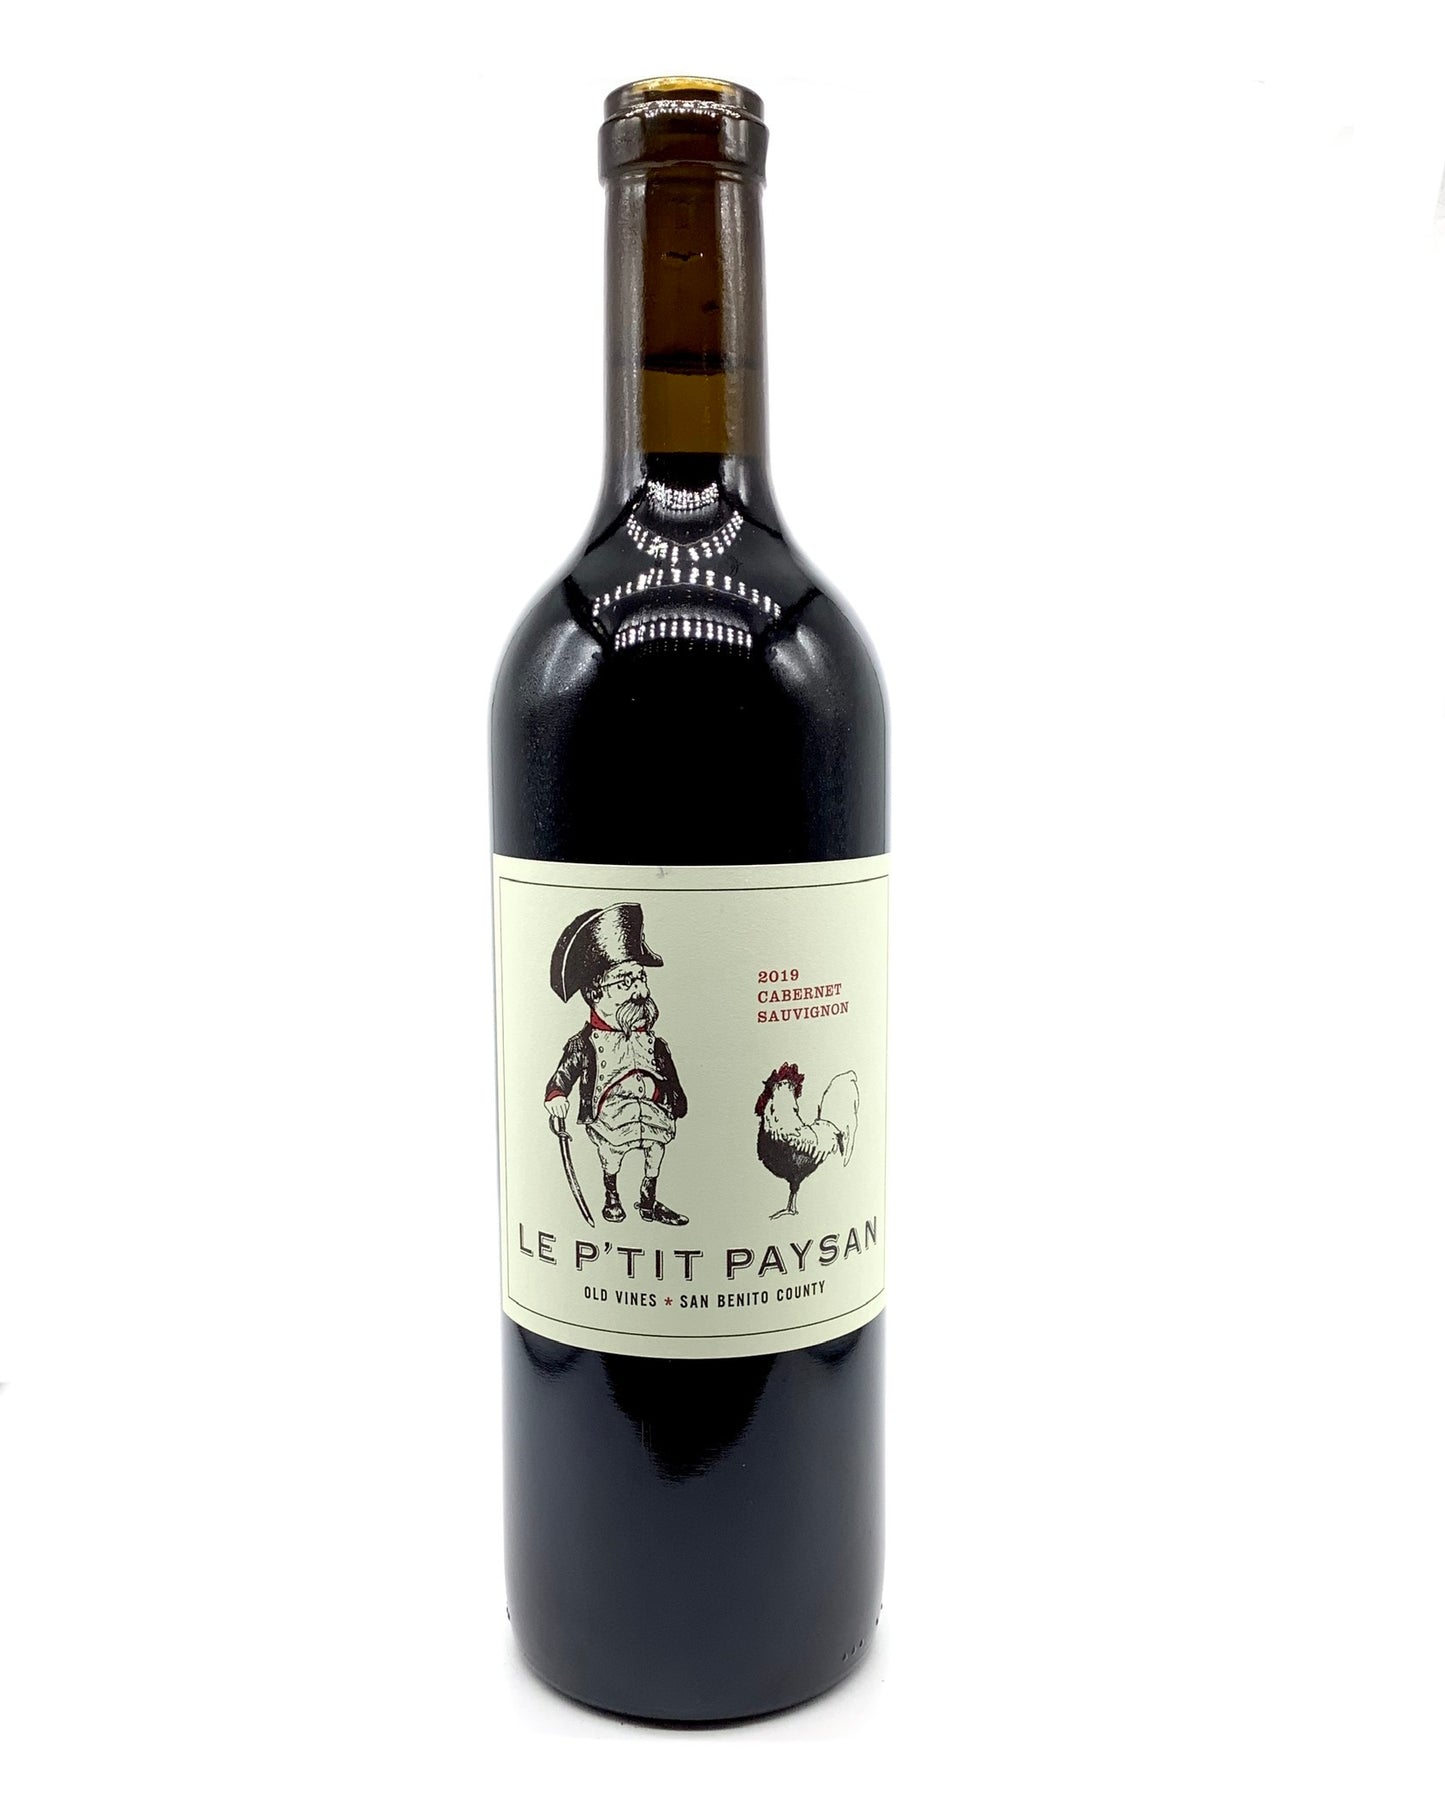 Le P'tit Paysan, Cabernet Sauvignon Old Vines, San Benito County, California 2020 sustainable